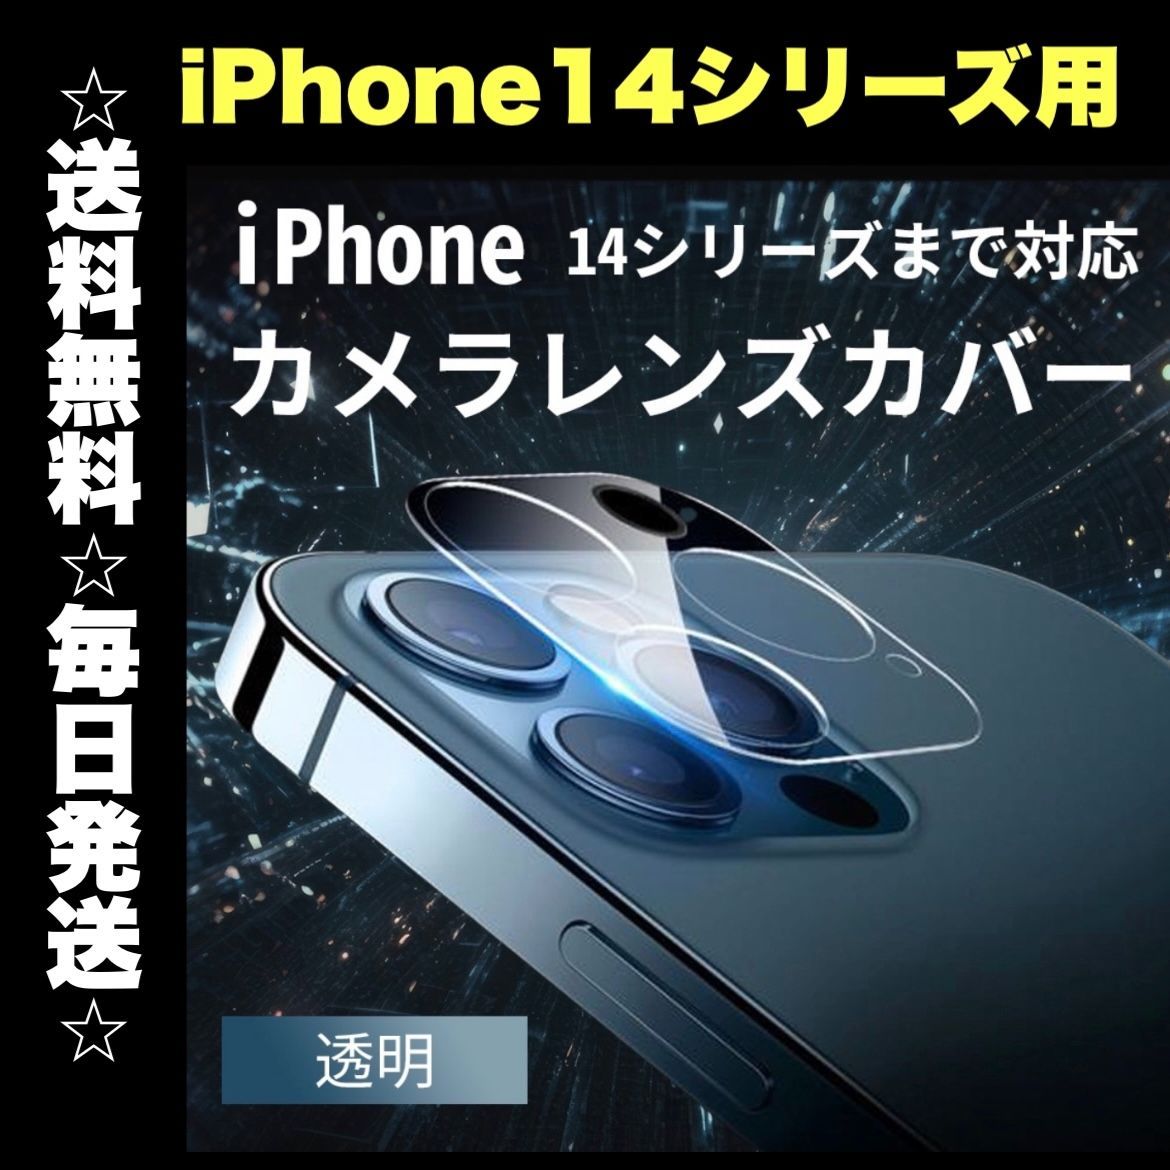 iPhone14Pro iPone14 iPhone14promax iPhone14plus 透明 カメラレンズカバー カメラカバー レンズ保護  iPhone フィルム iPhone 14 pro promax plus メルカリShops